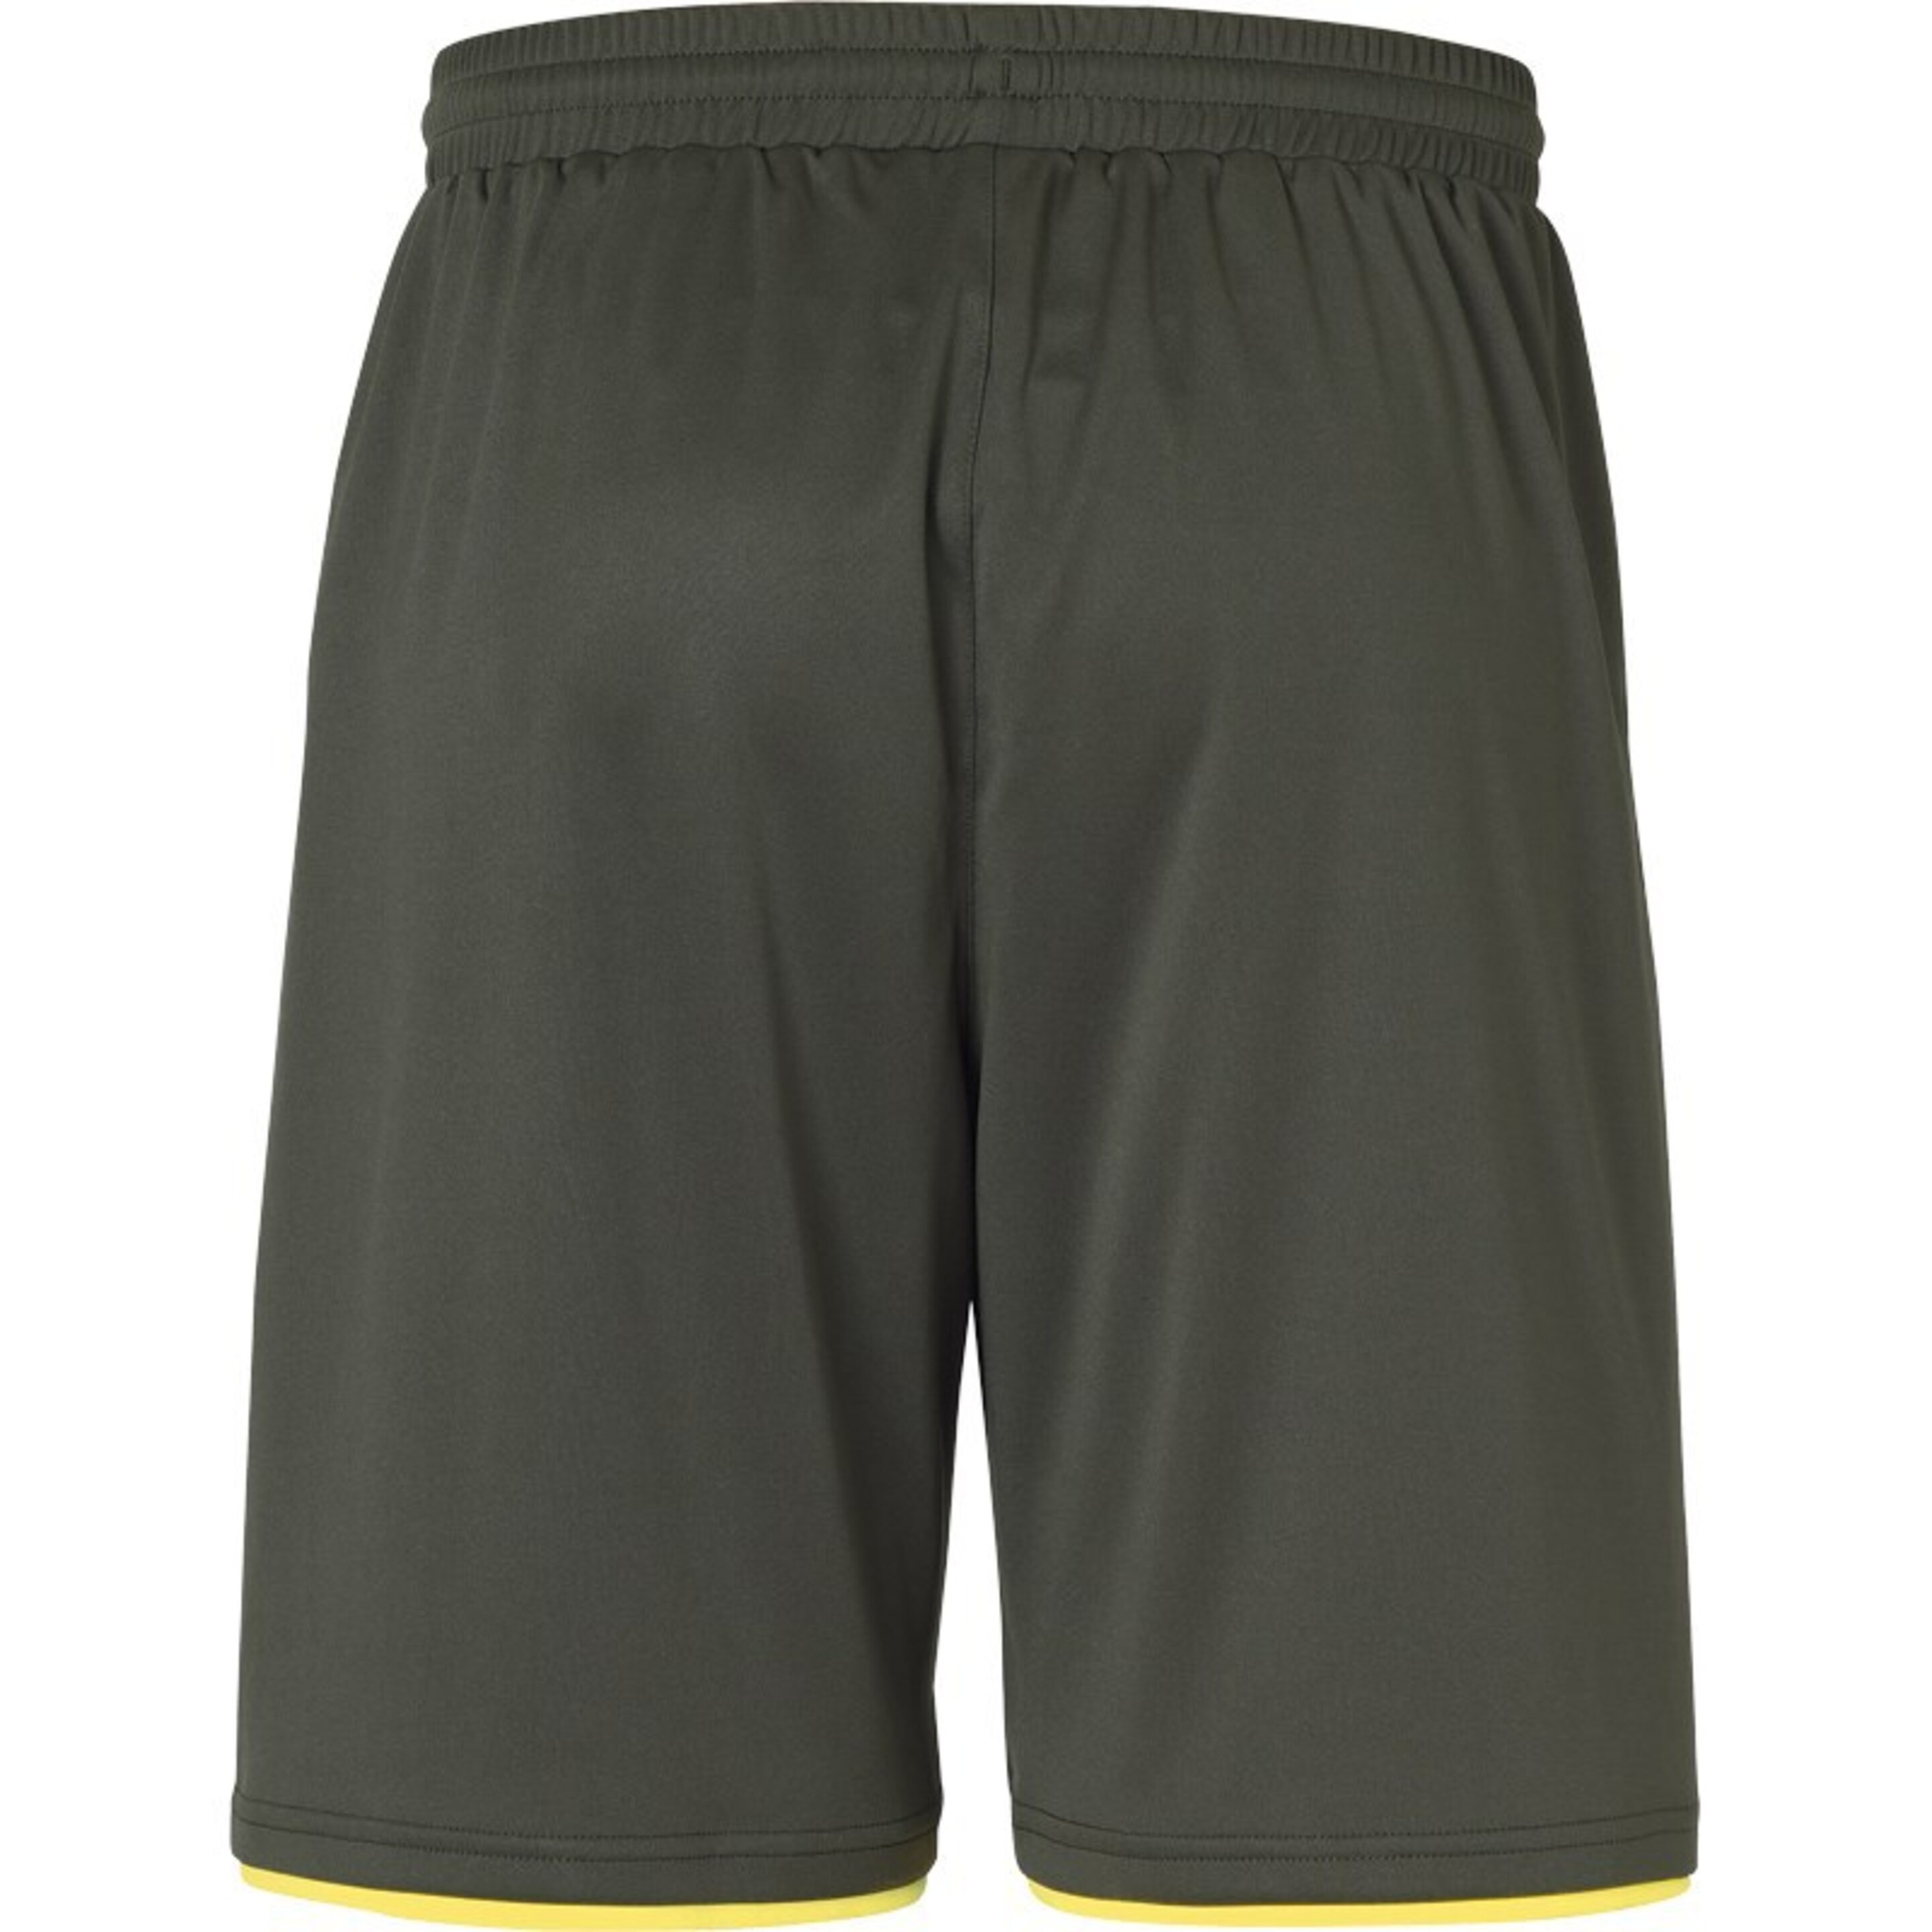 Club Shorts Dark Olive/amarillo Fluor Uhlsport